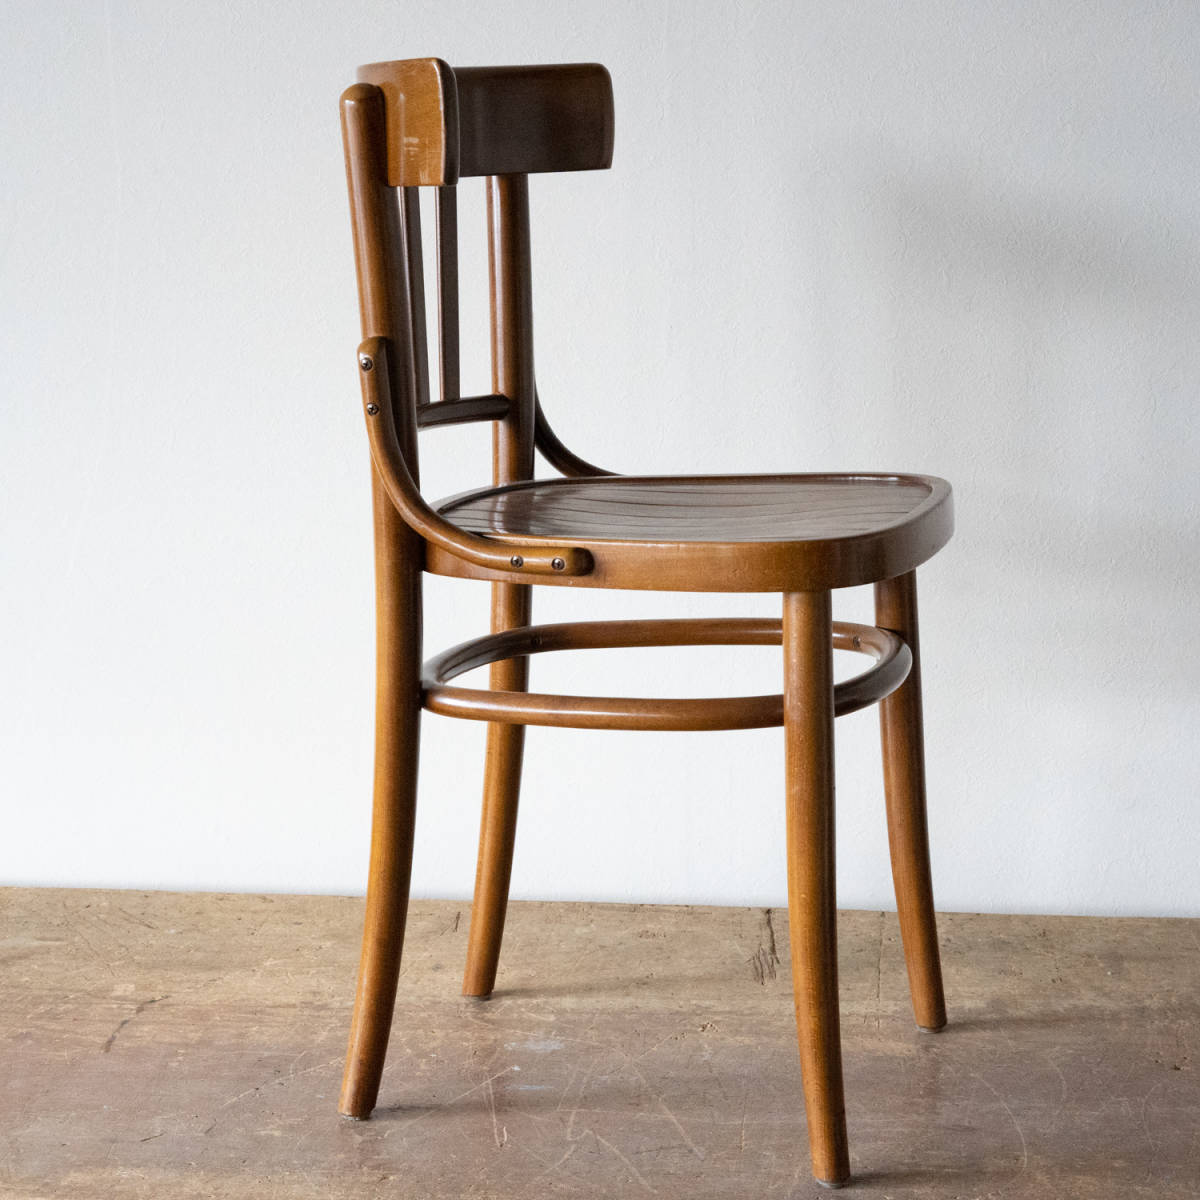 IDEE ベントウッドチェア トーネットチェア イデー 椅子